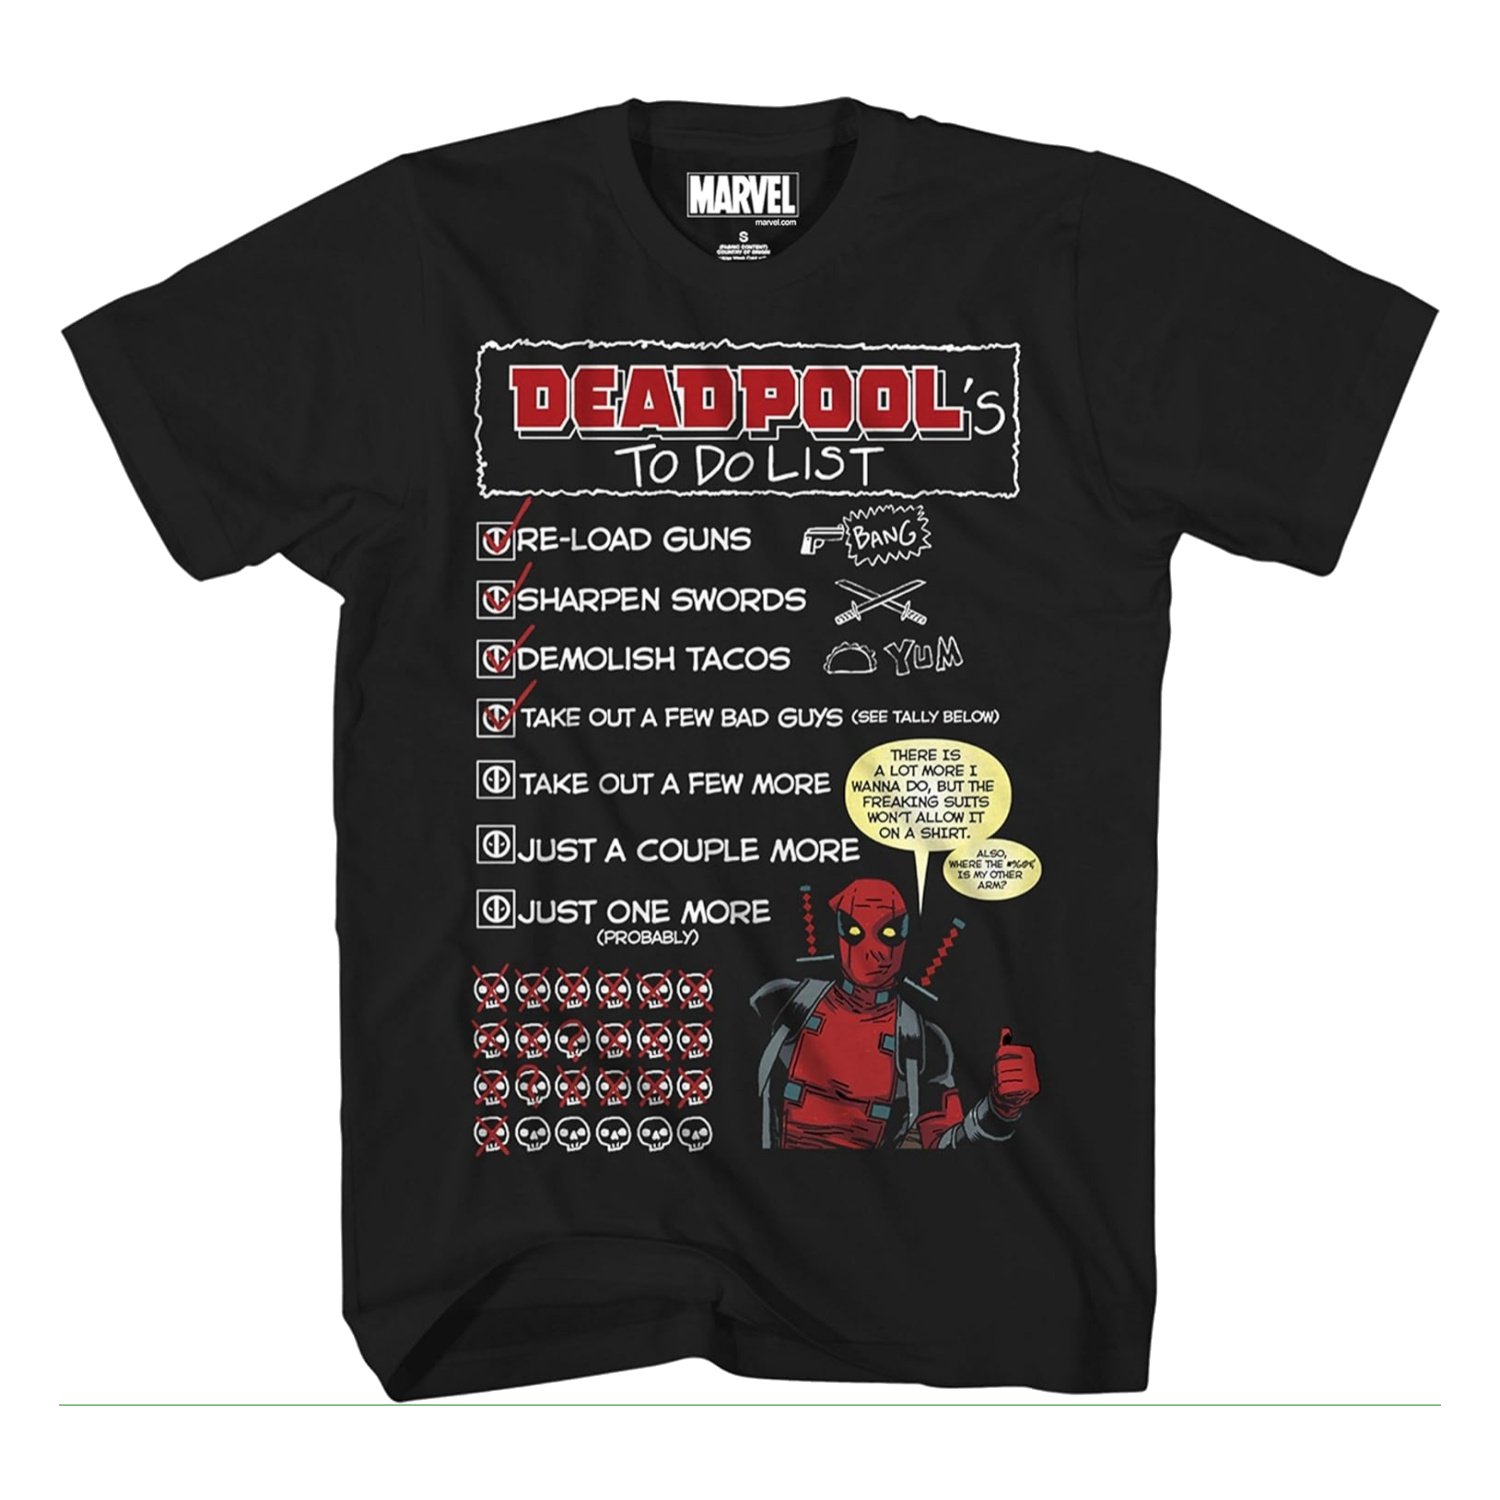 Deadpool To Do List shirt